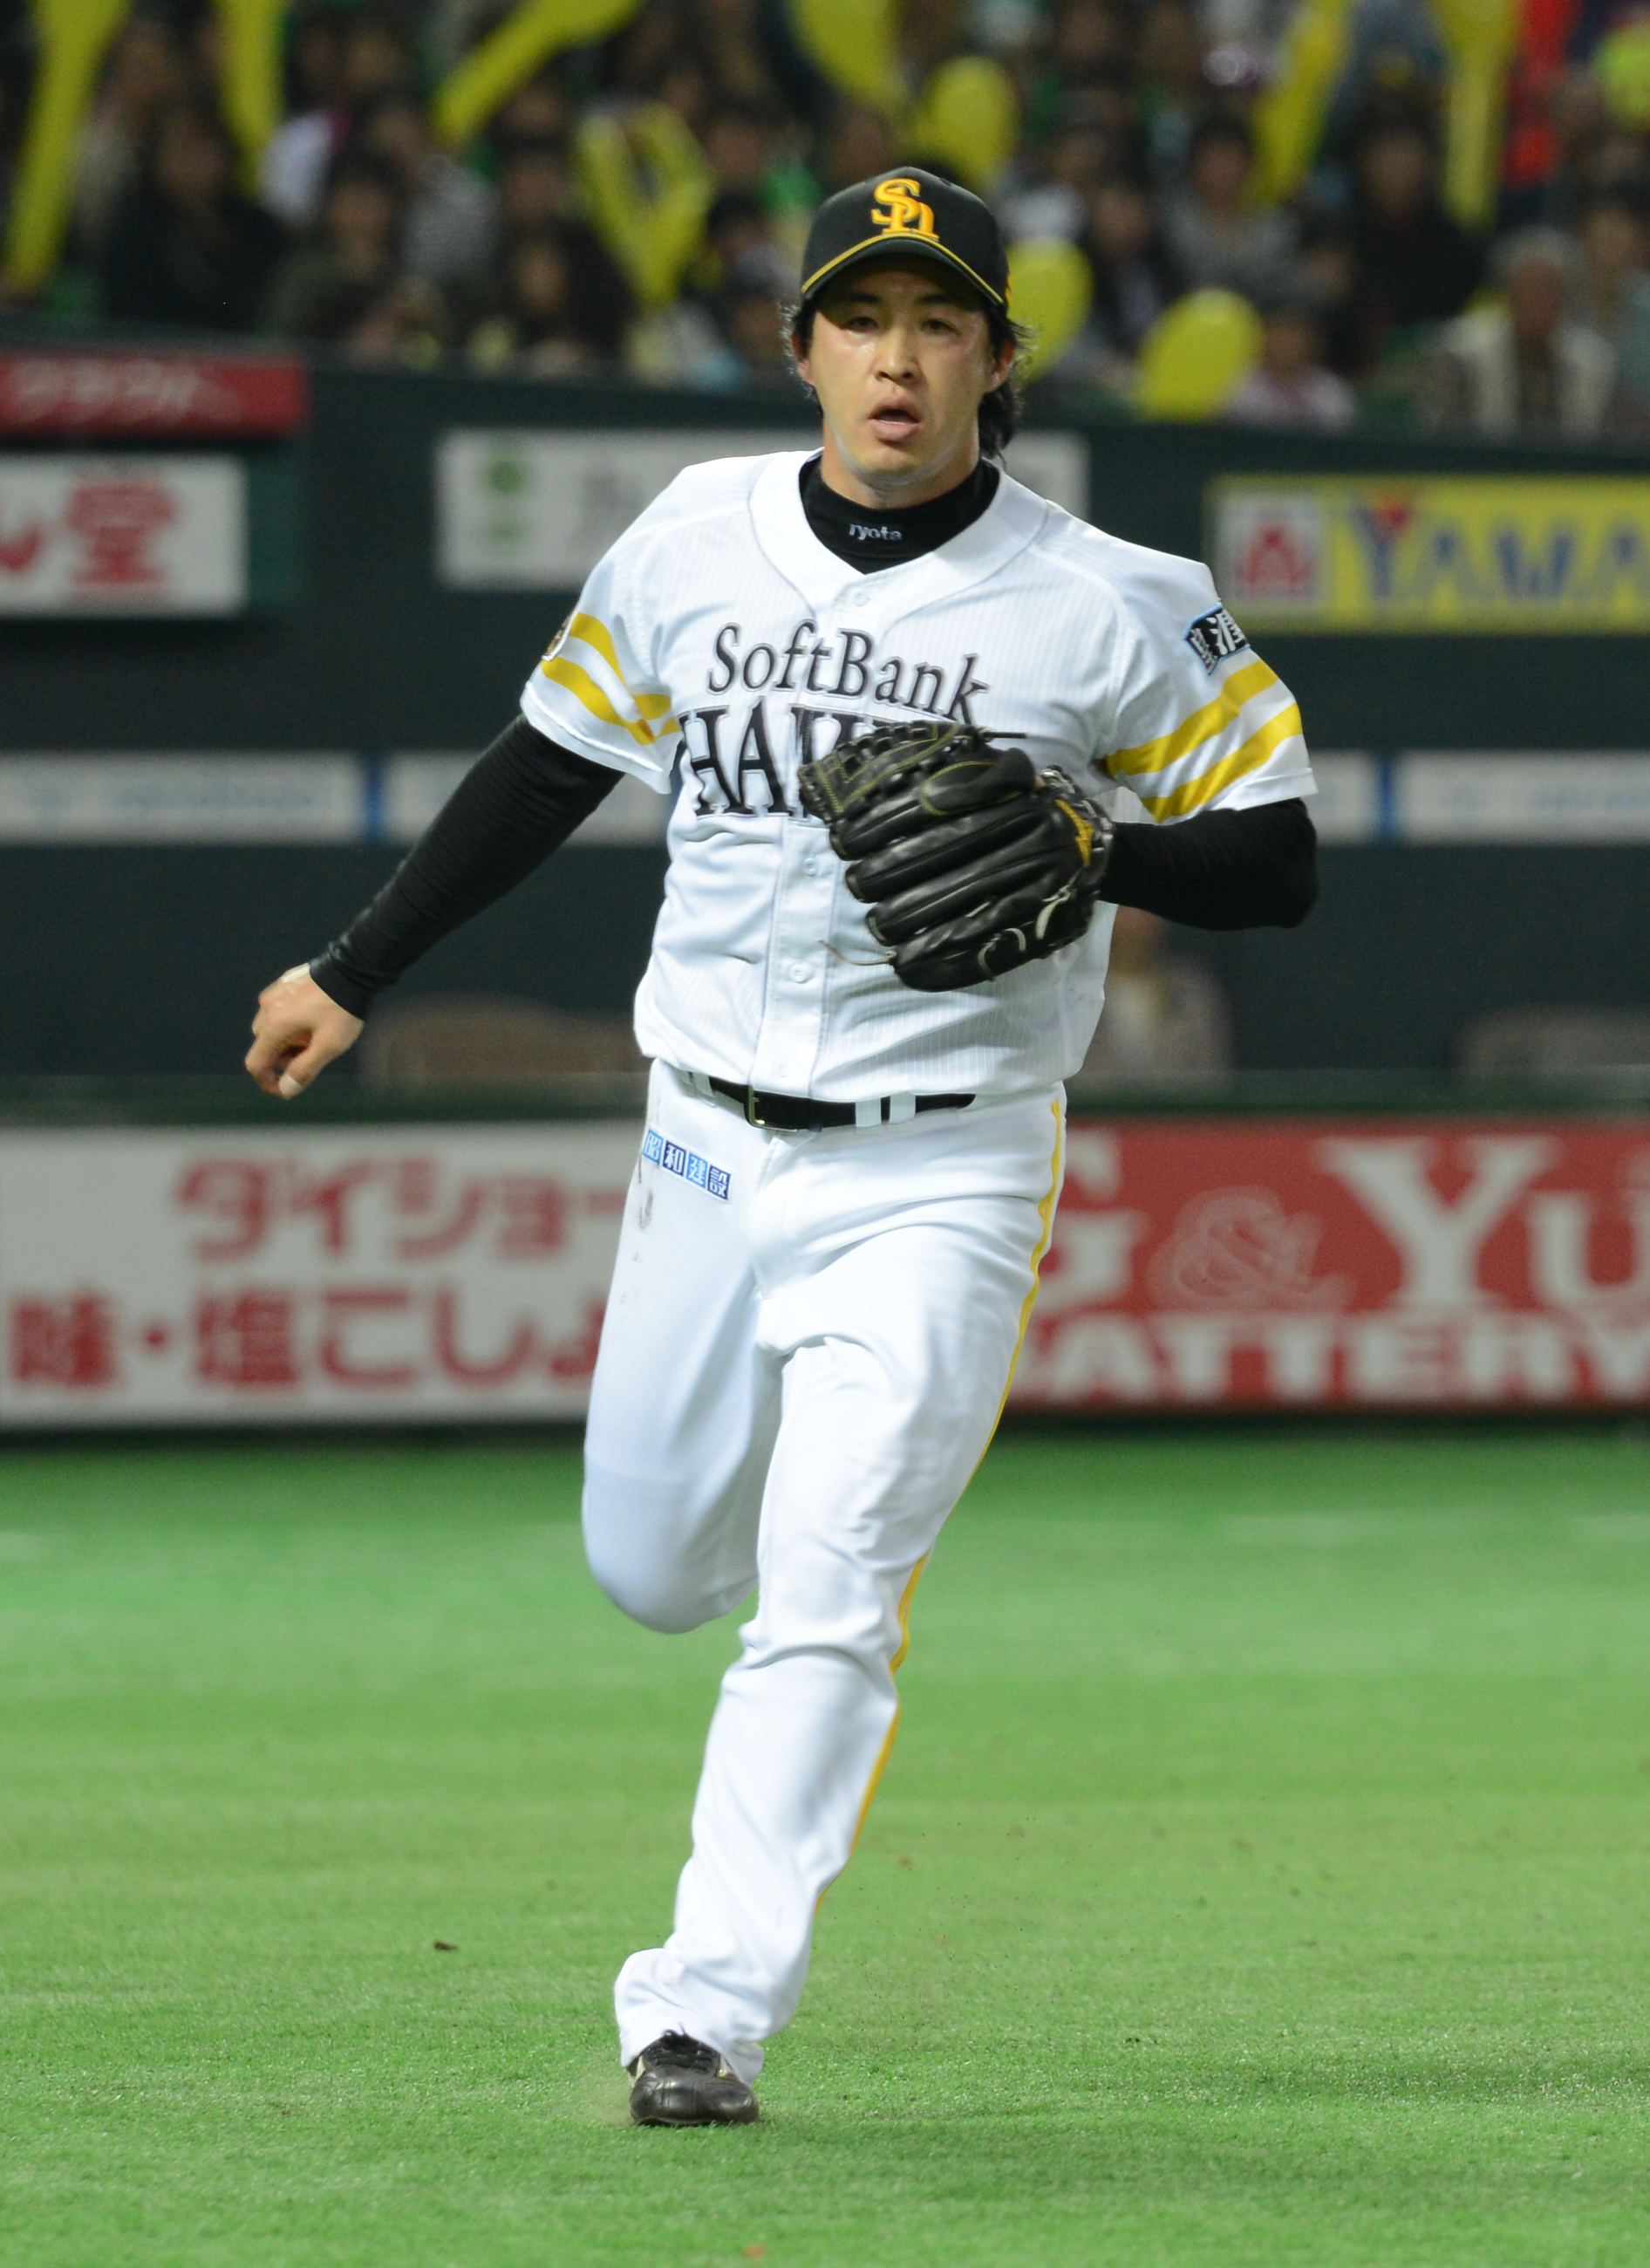 Hideki Matsui was the starting pitcher for an NYC rec league